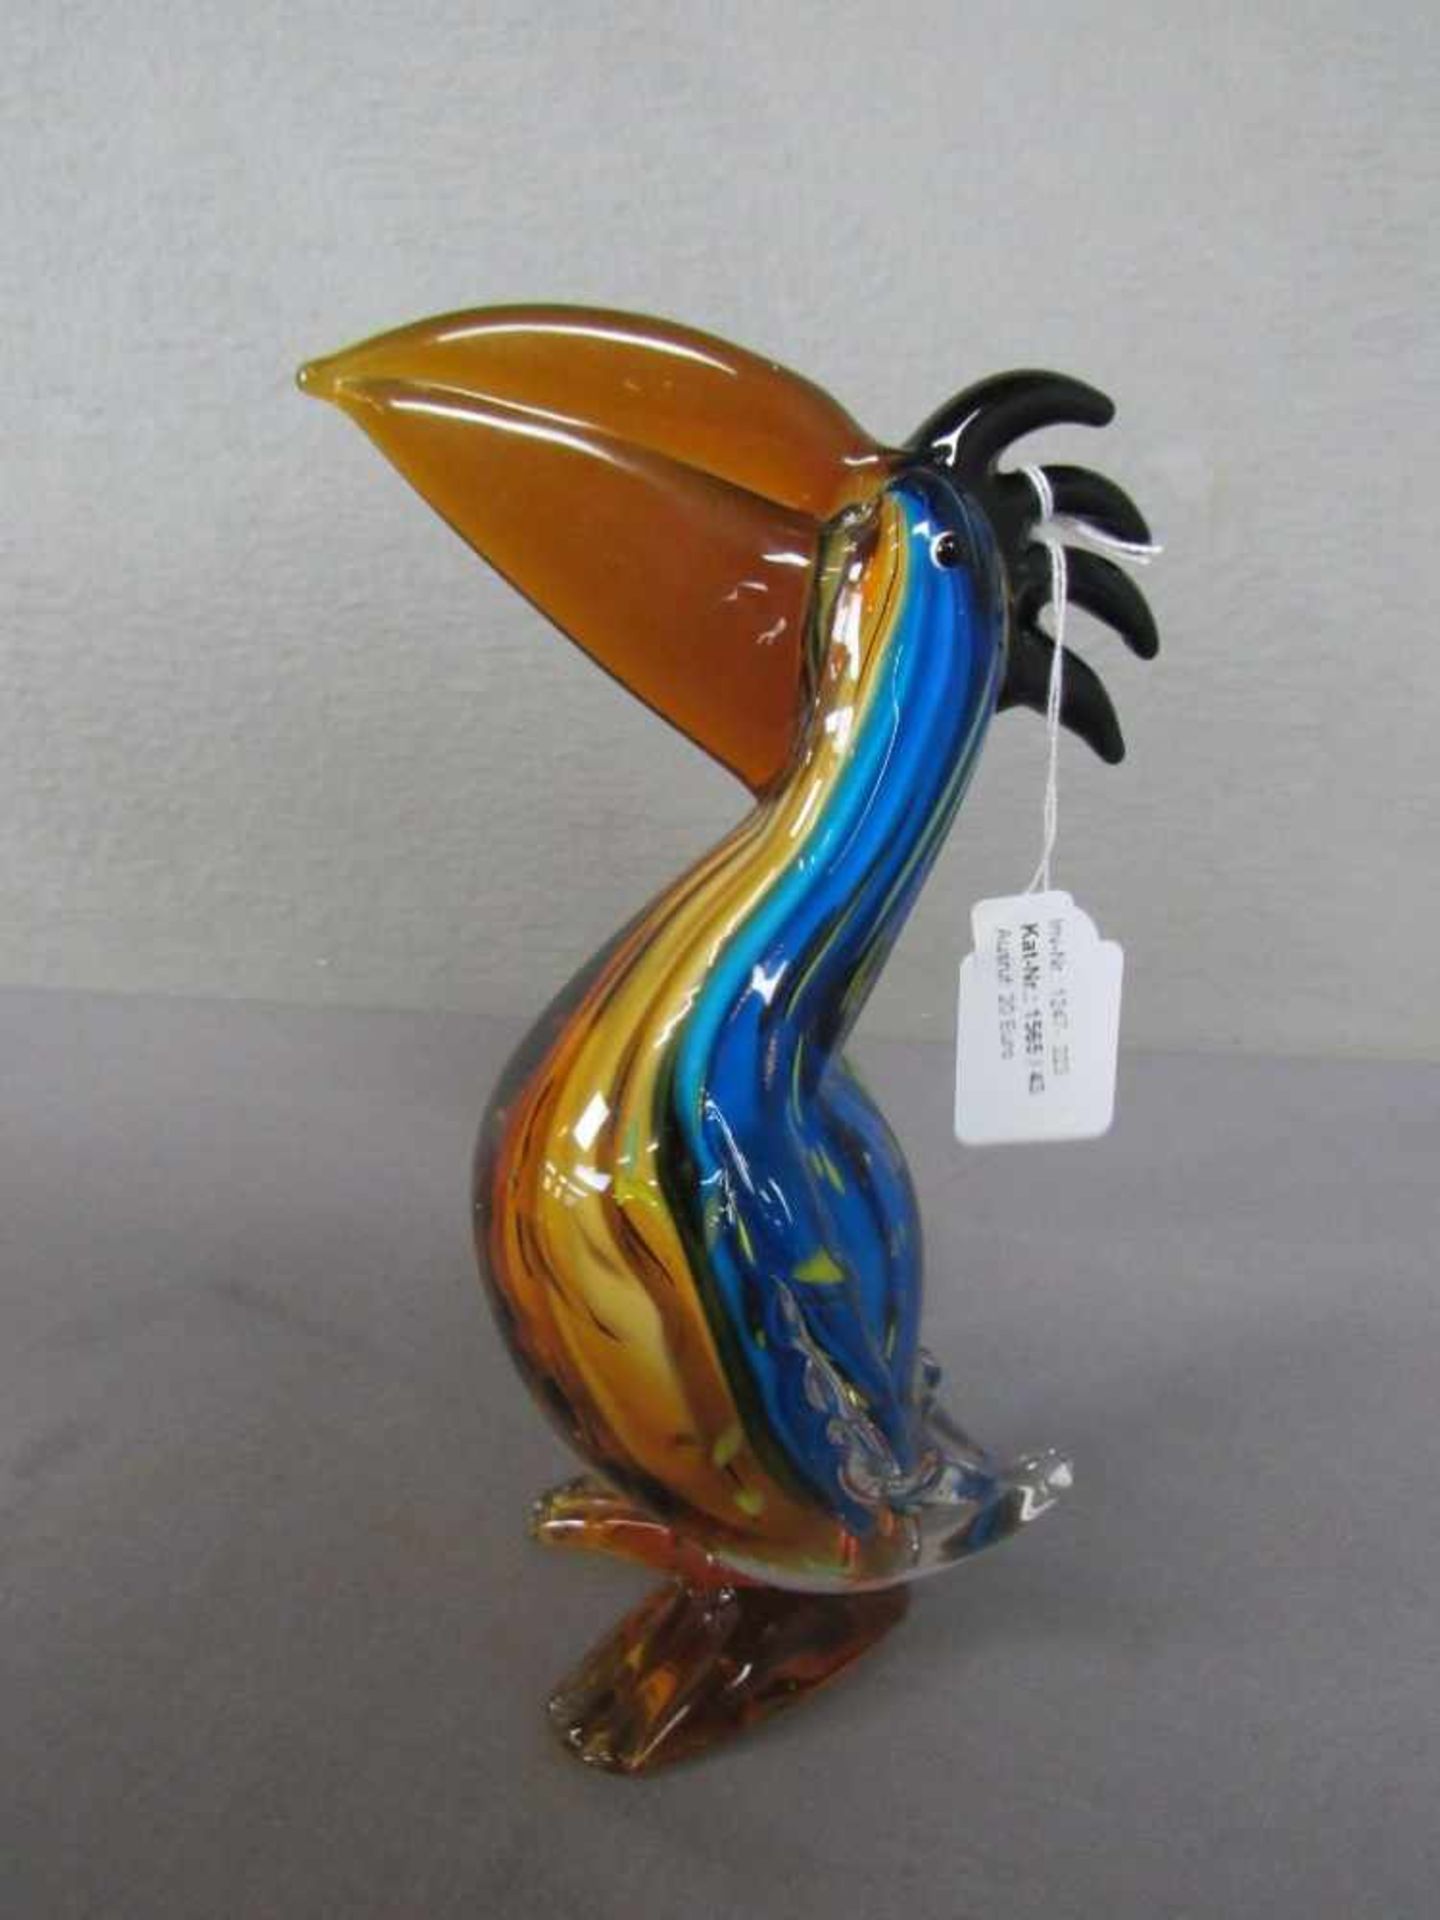 Glasskulptur Pelikan farbenfroh evtl Murano 26cm hoch- - -20.00 % buyer's premium on the hammer - Bild 2 aus 2